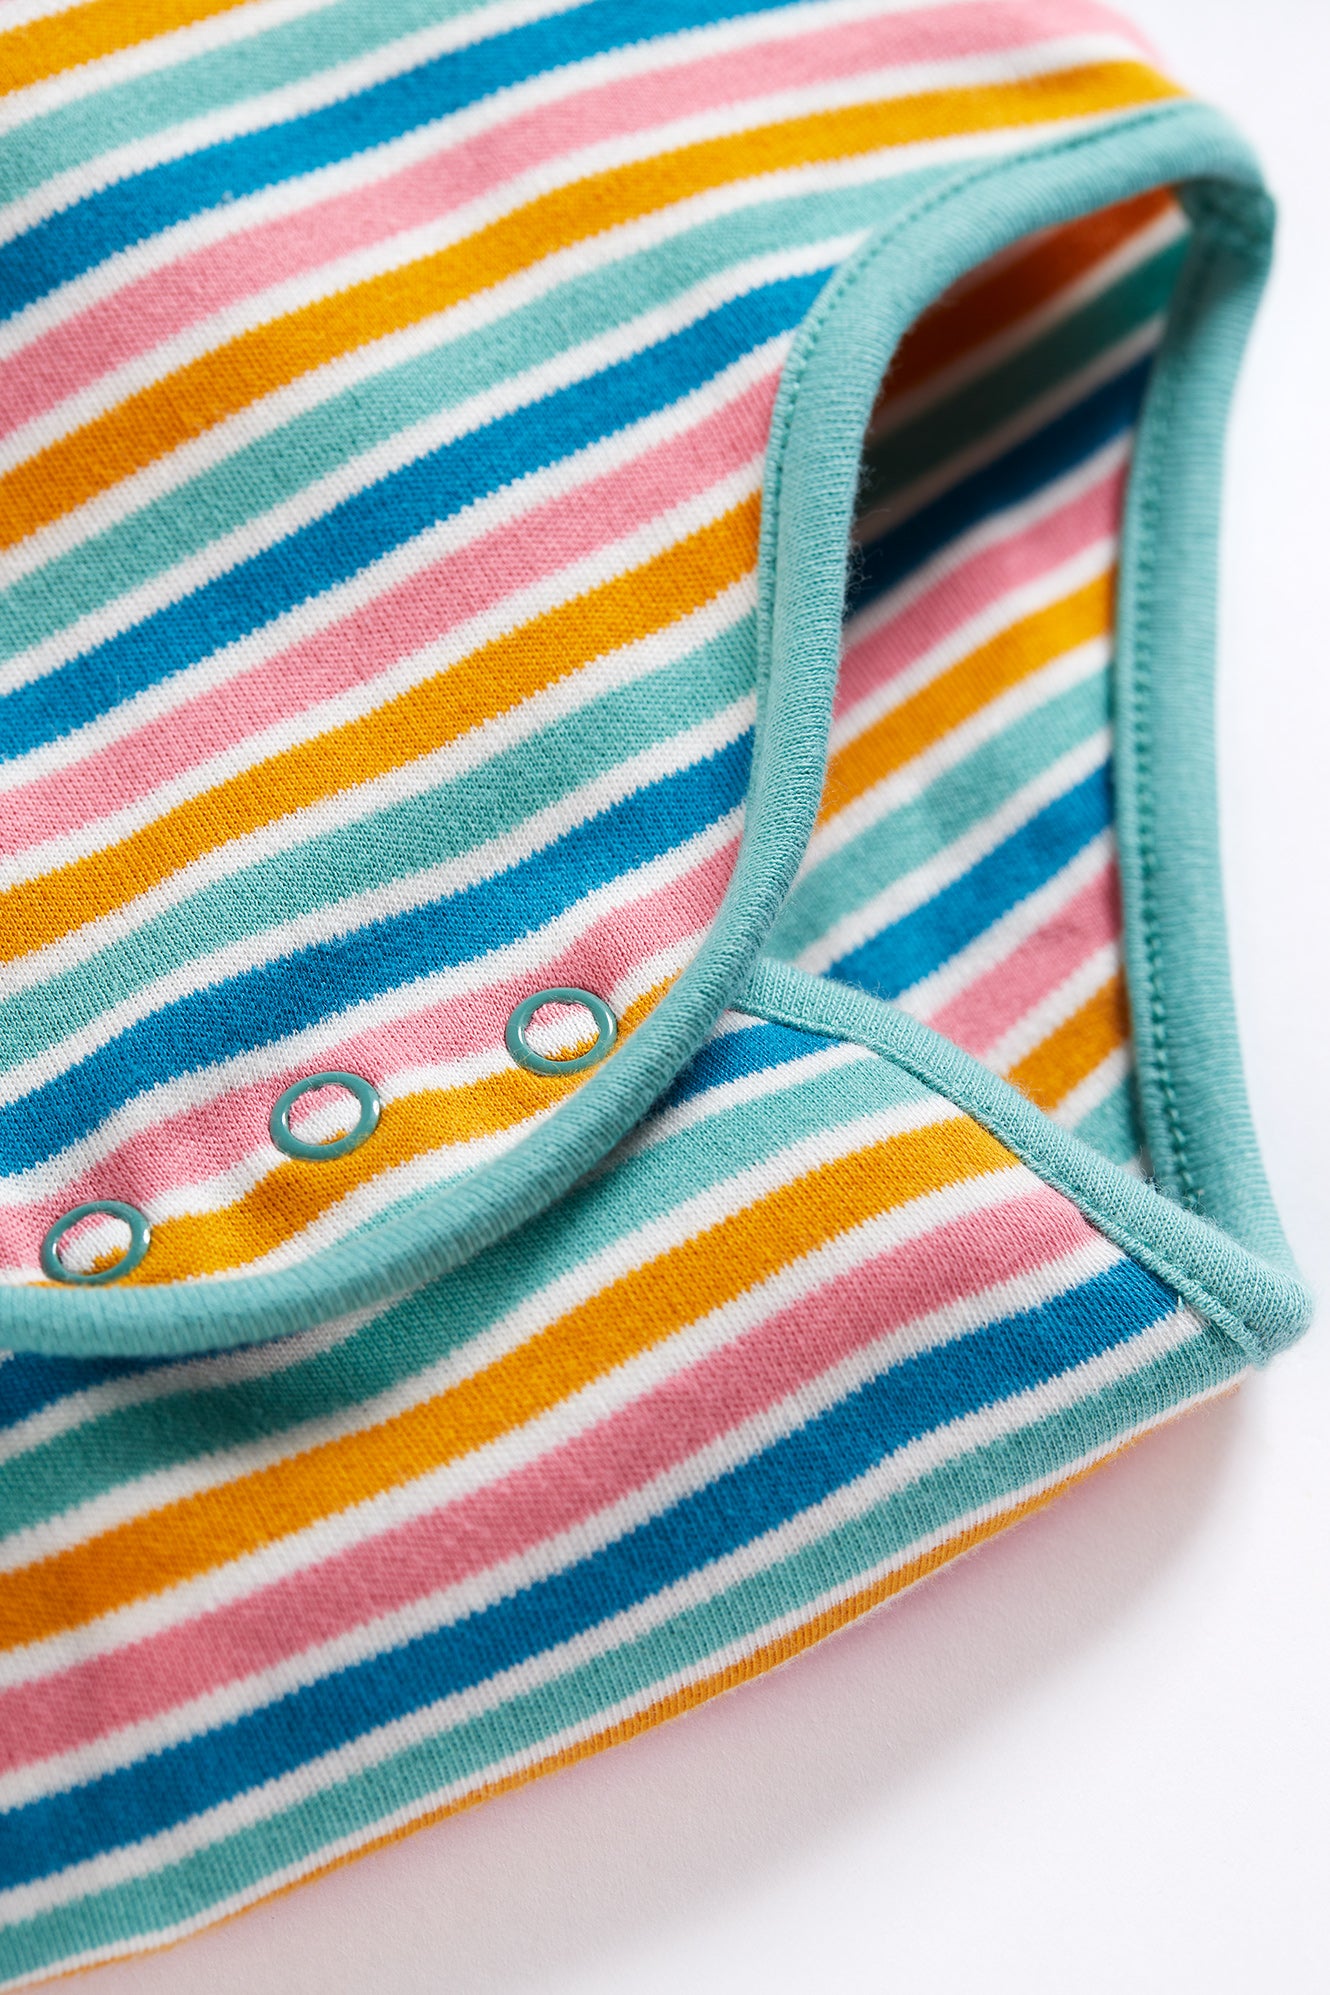 Natures Rainbow Stripe | Betty Body | Long Sleeve Baby Bodysuit | GOTS Organic Cotton